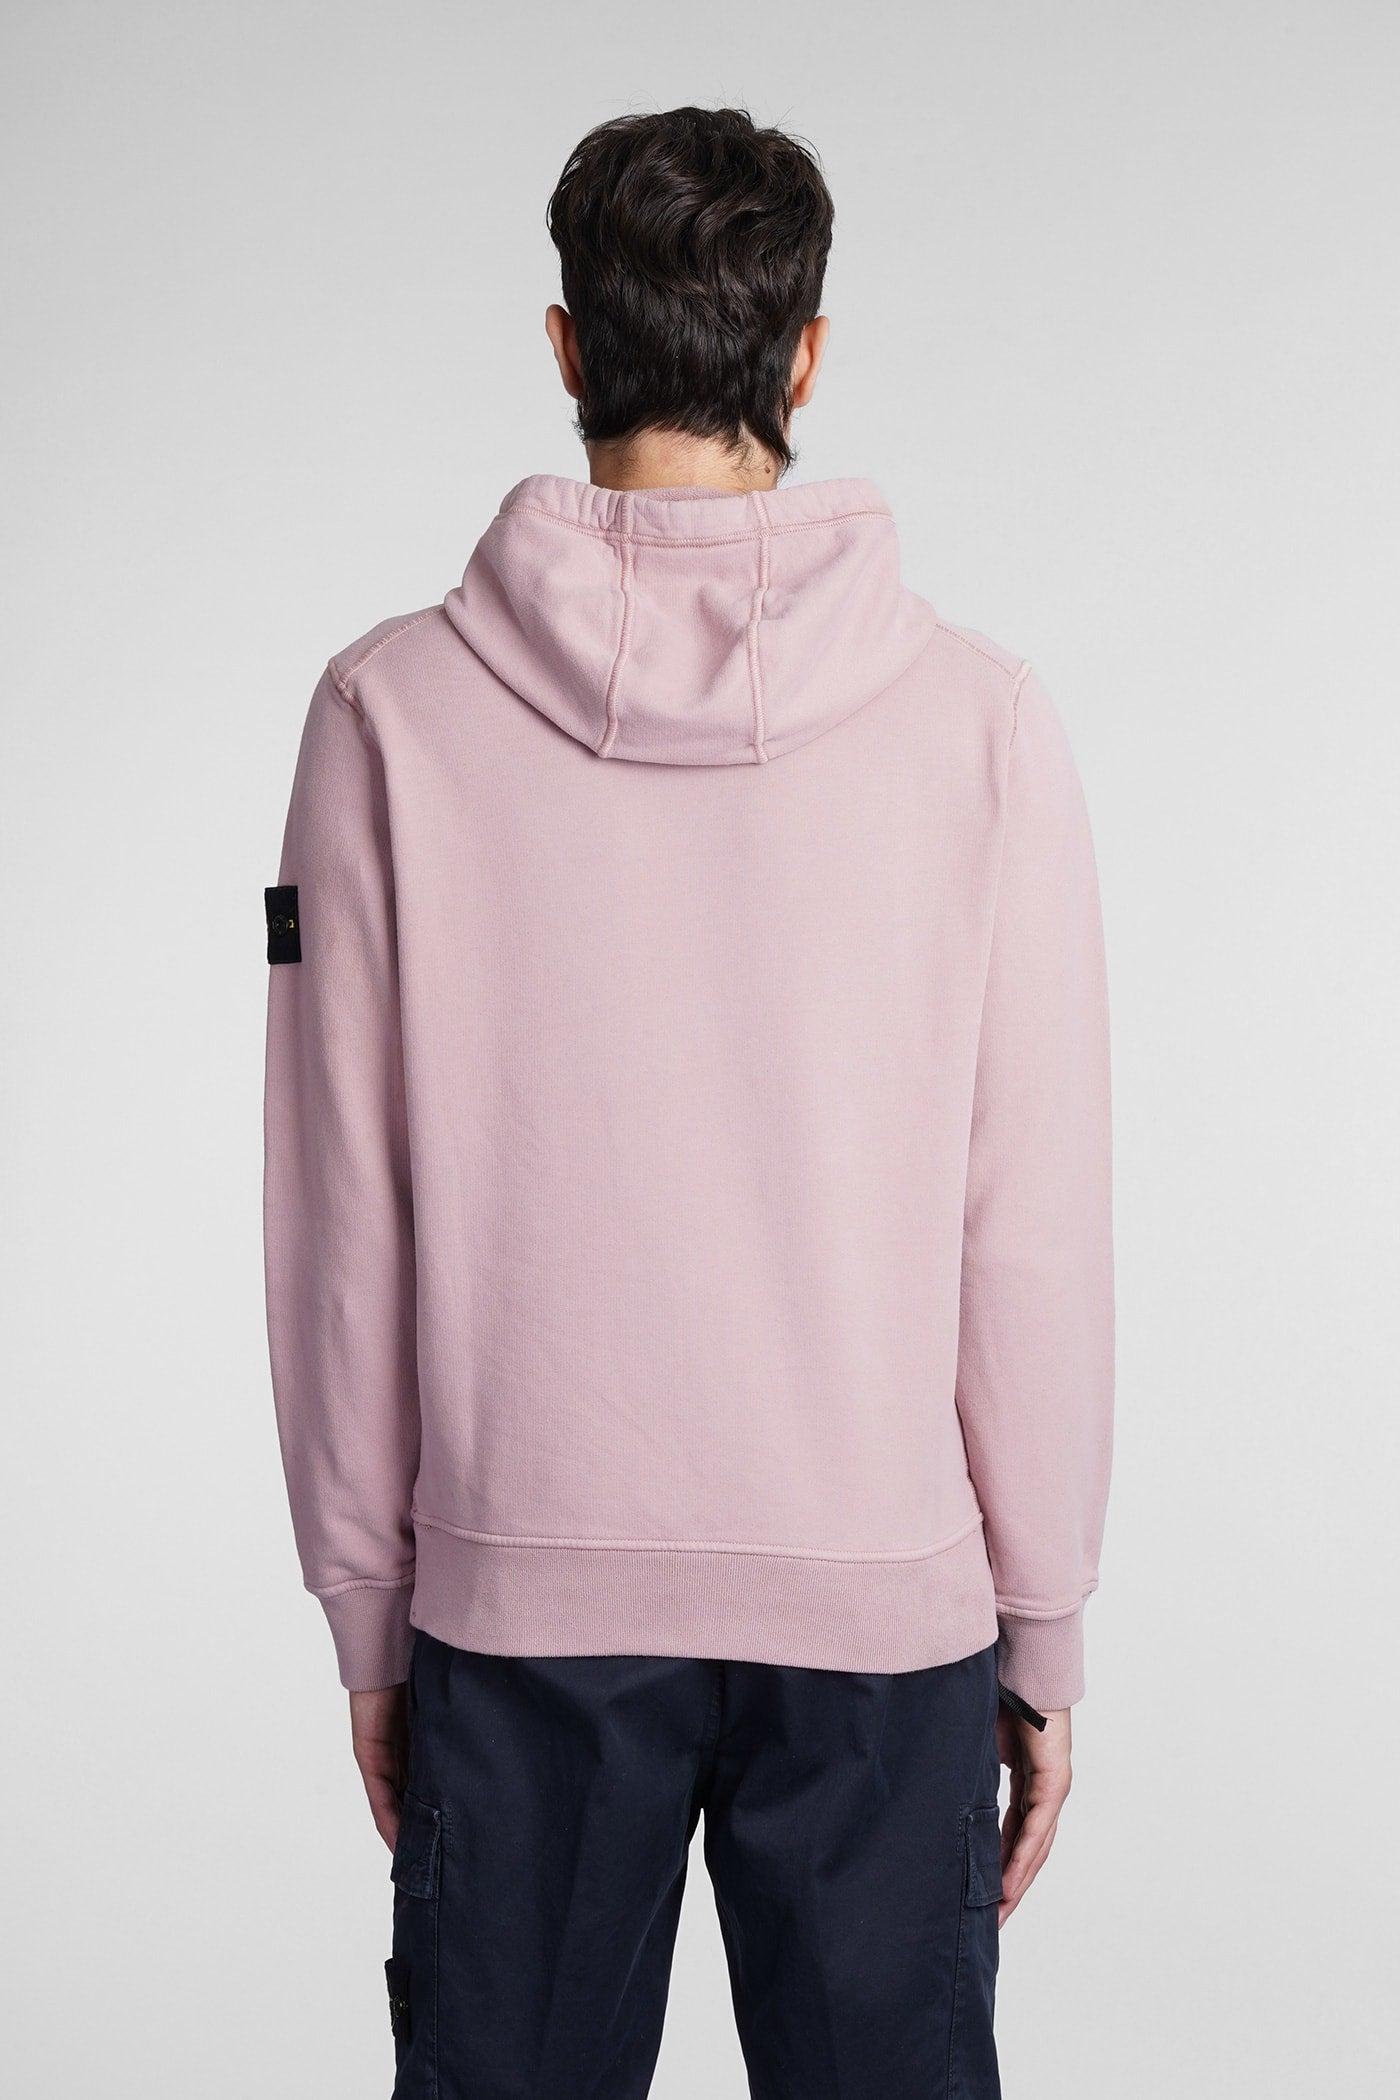 Stone Island Sweatshirt In Rose-pink Cotton for Men - Save 43% | Lyst